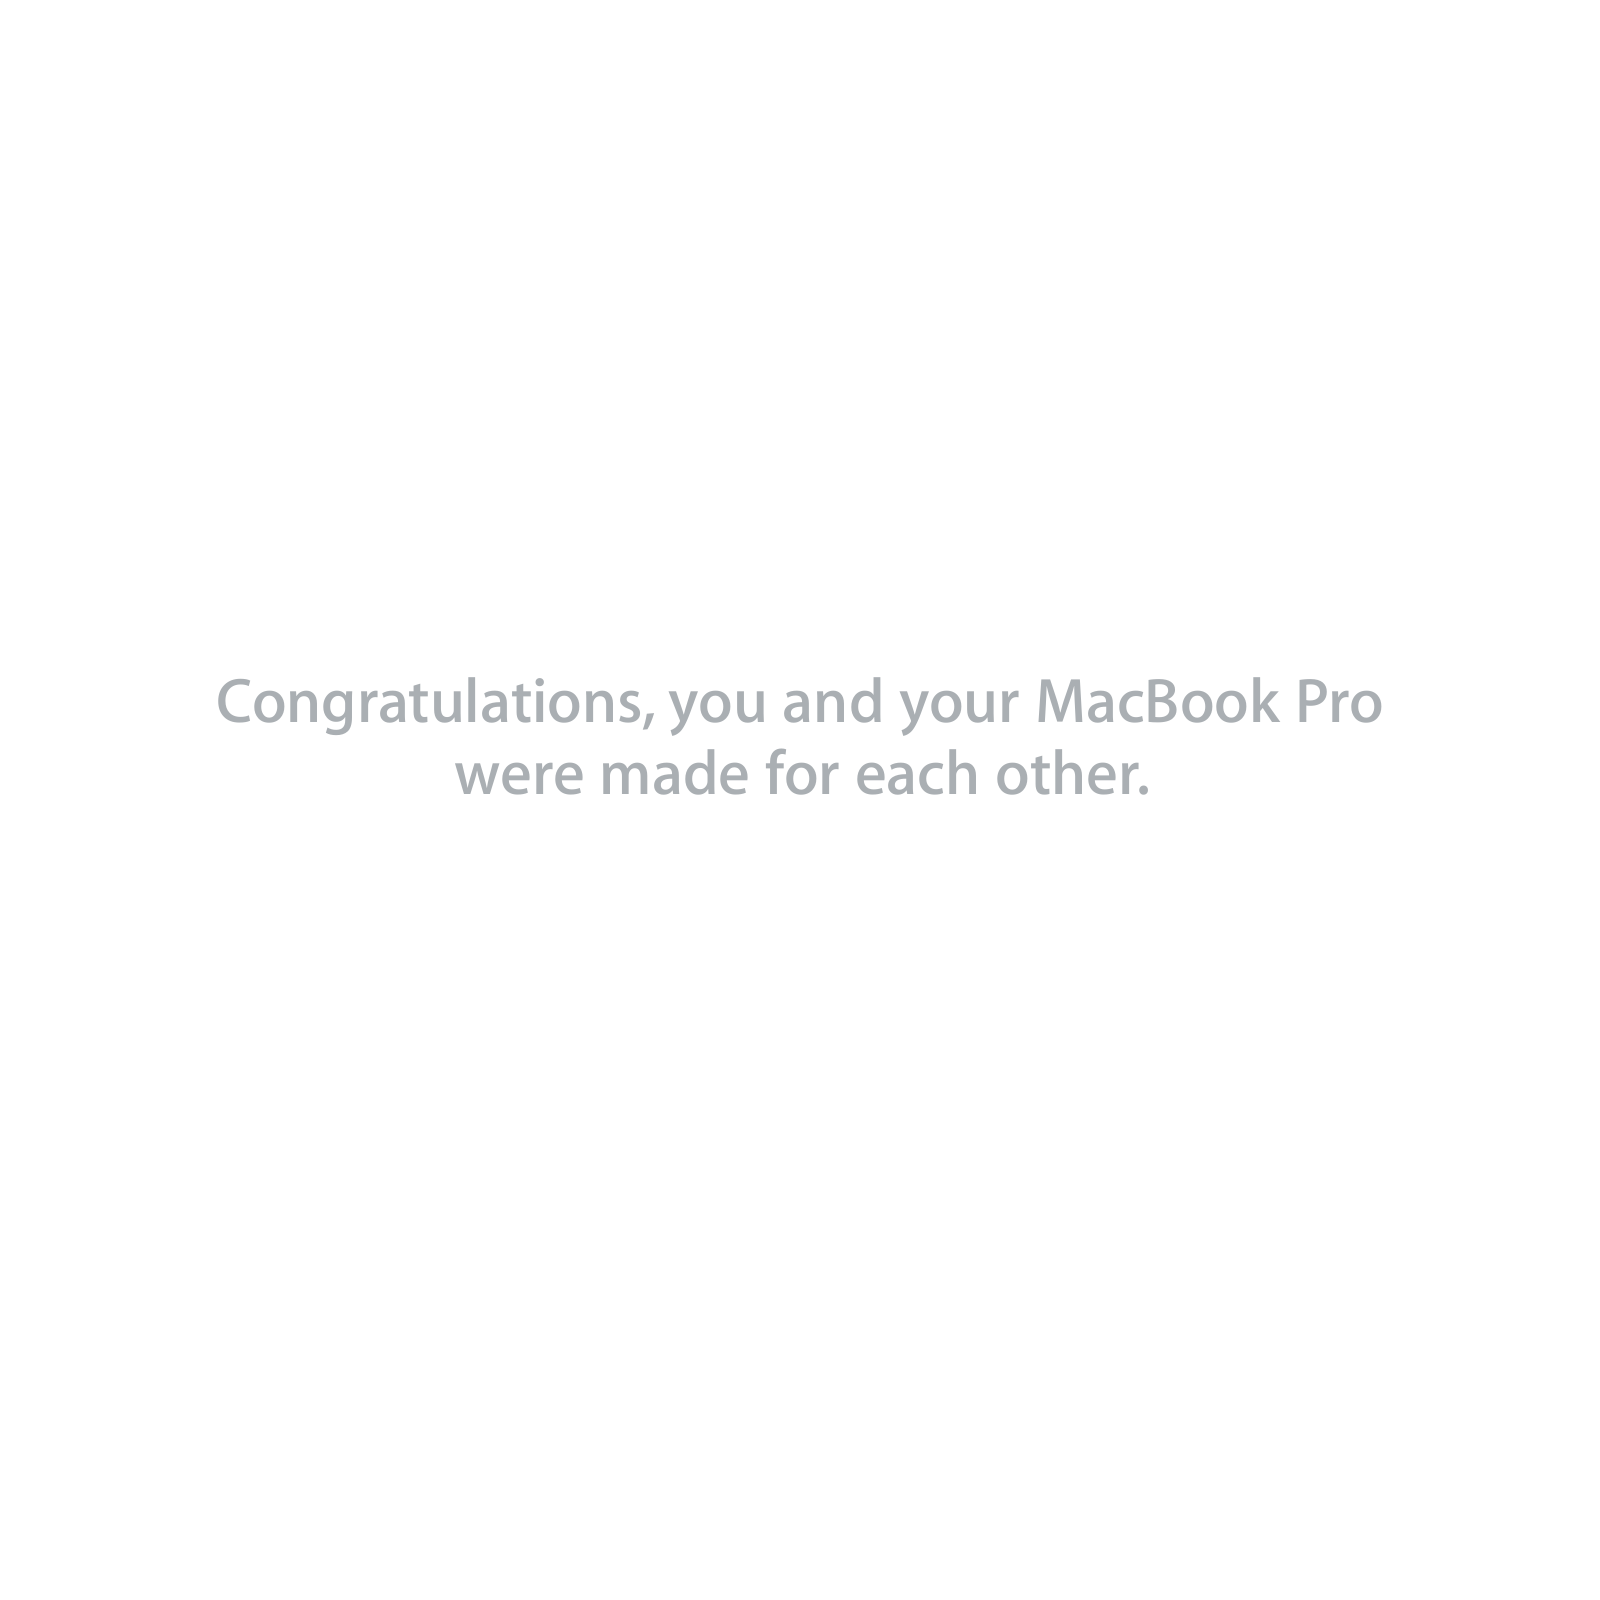 Apple MACBOOK PRO 15 INCH User Manual 2011